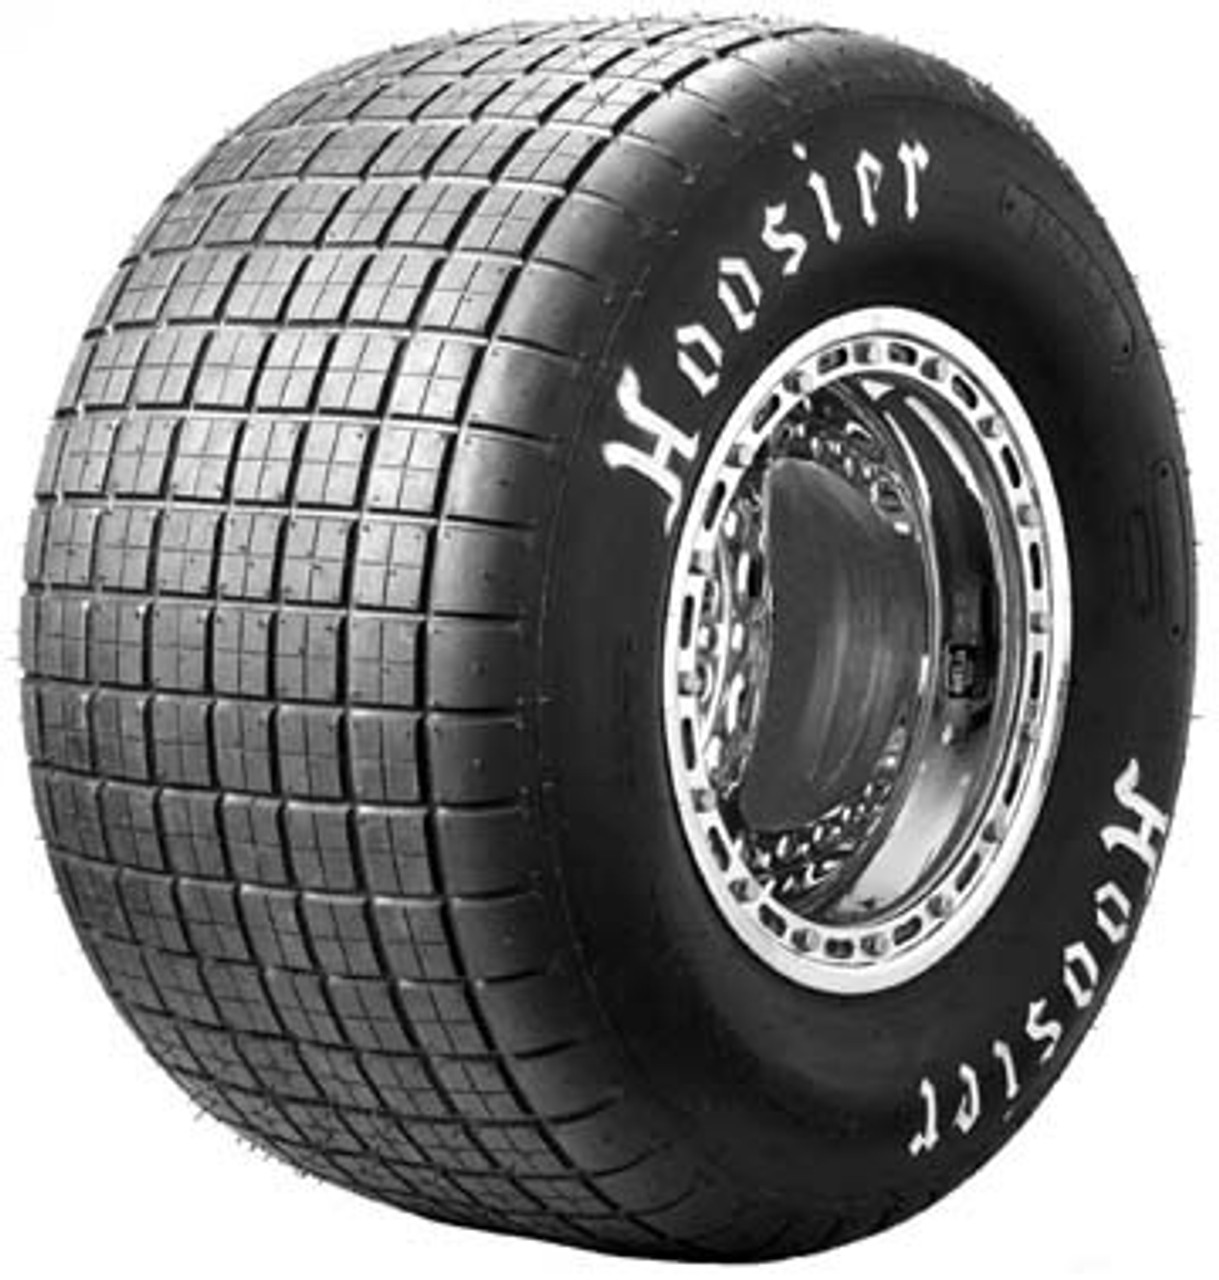 Hoosier Late Model Dirt Tire UMP LM90/11 LCB M40 - 36627M40